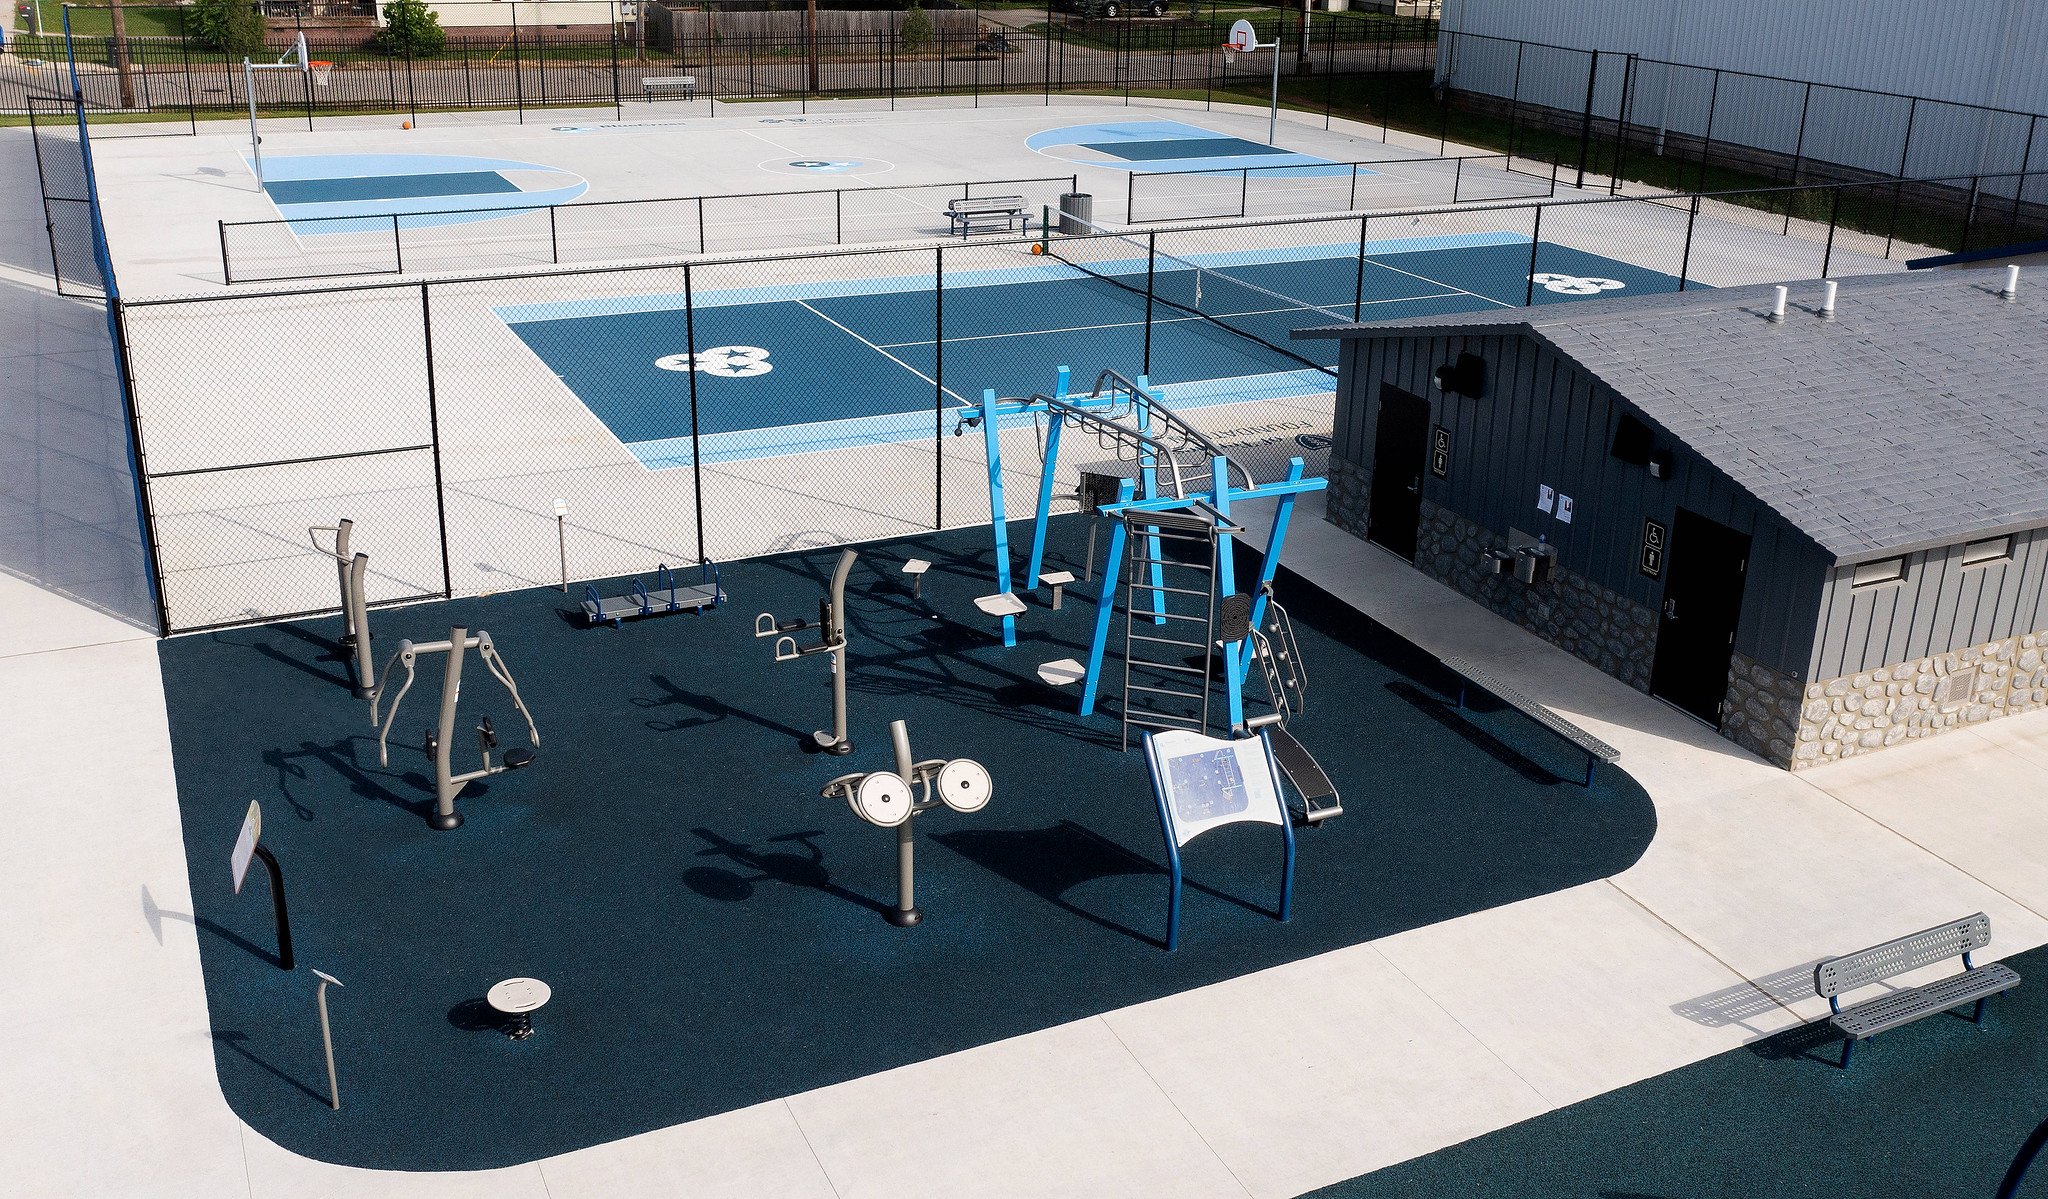 BCBS basketball court, tennis court, and outdoor fitness equipment